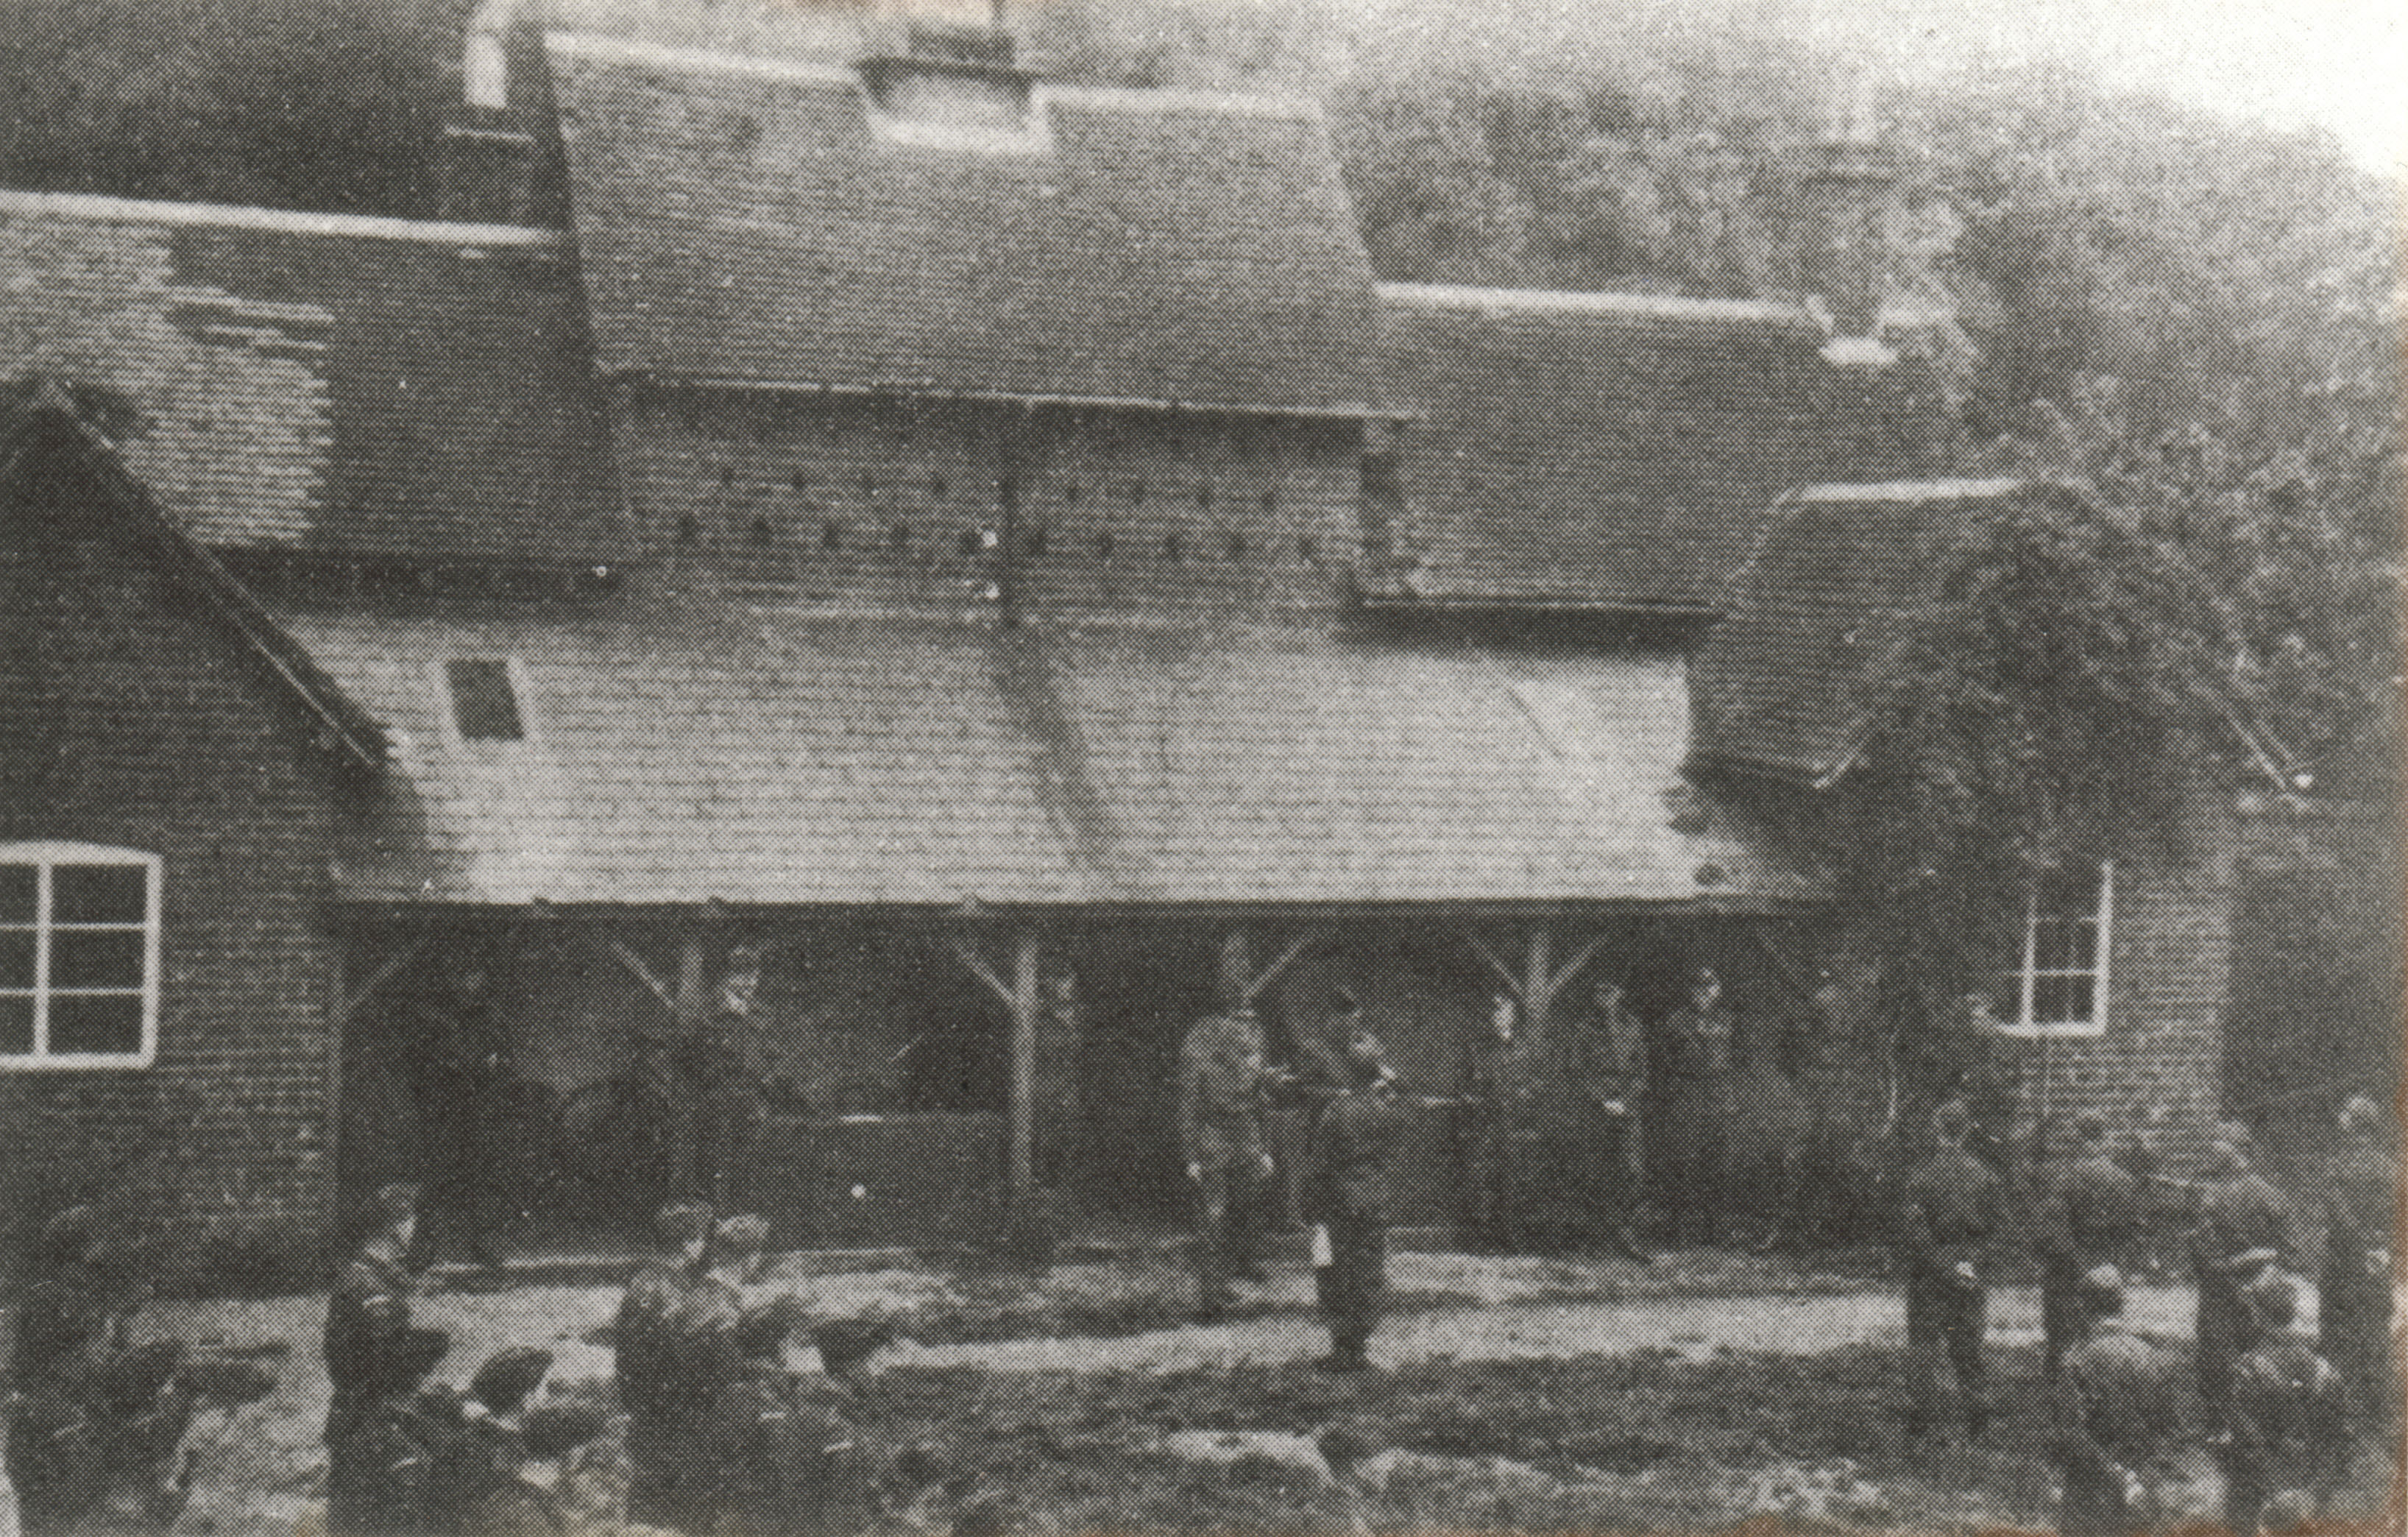 The Home Guard at the Golf Club house, Patshull Cira 1942